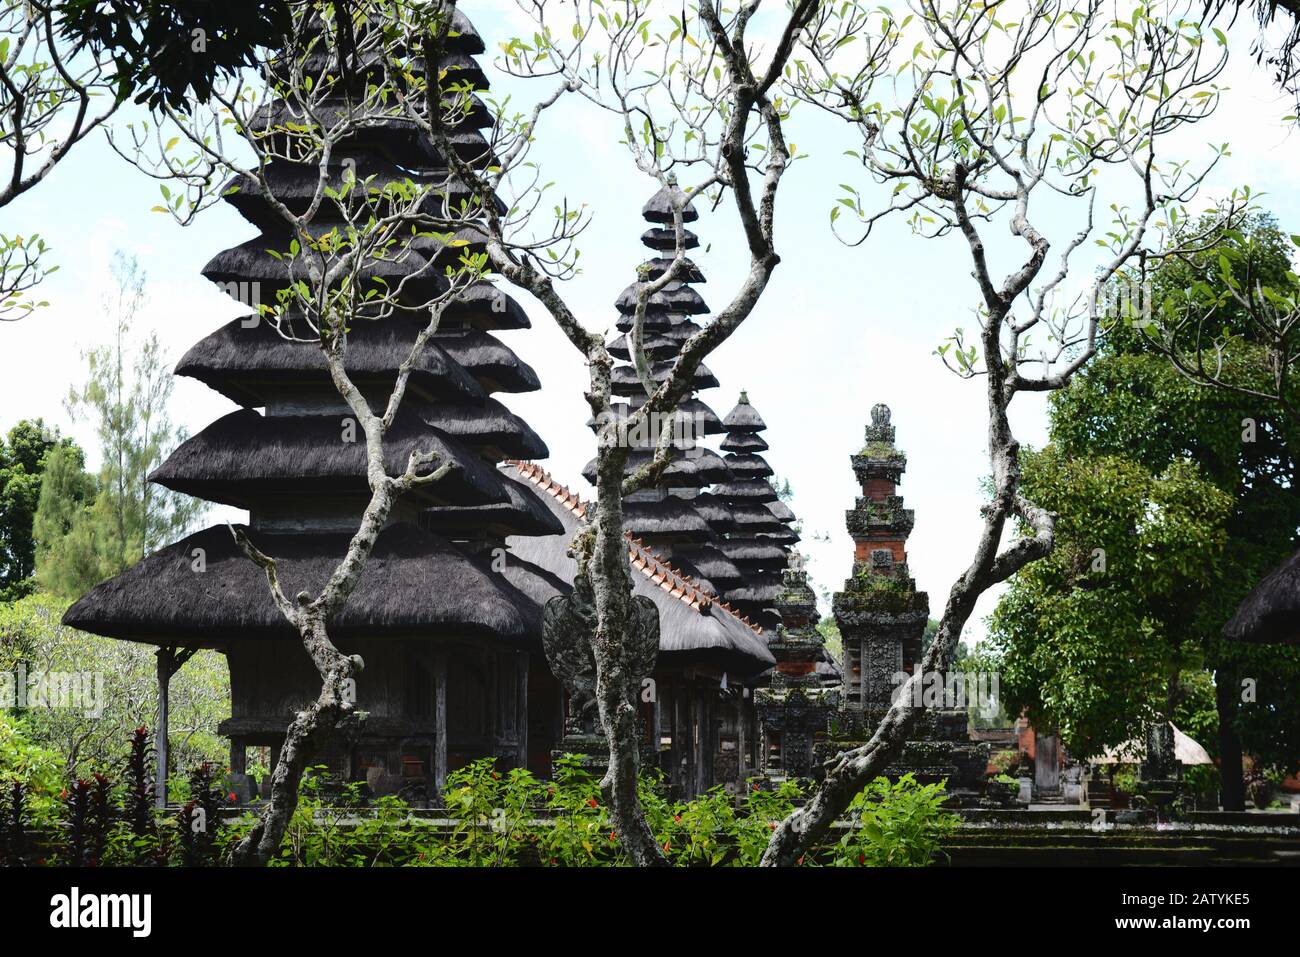 Taman Ayun Temple with Trees in Bali Indonesia Stock Photo